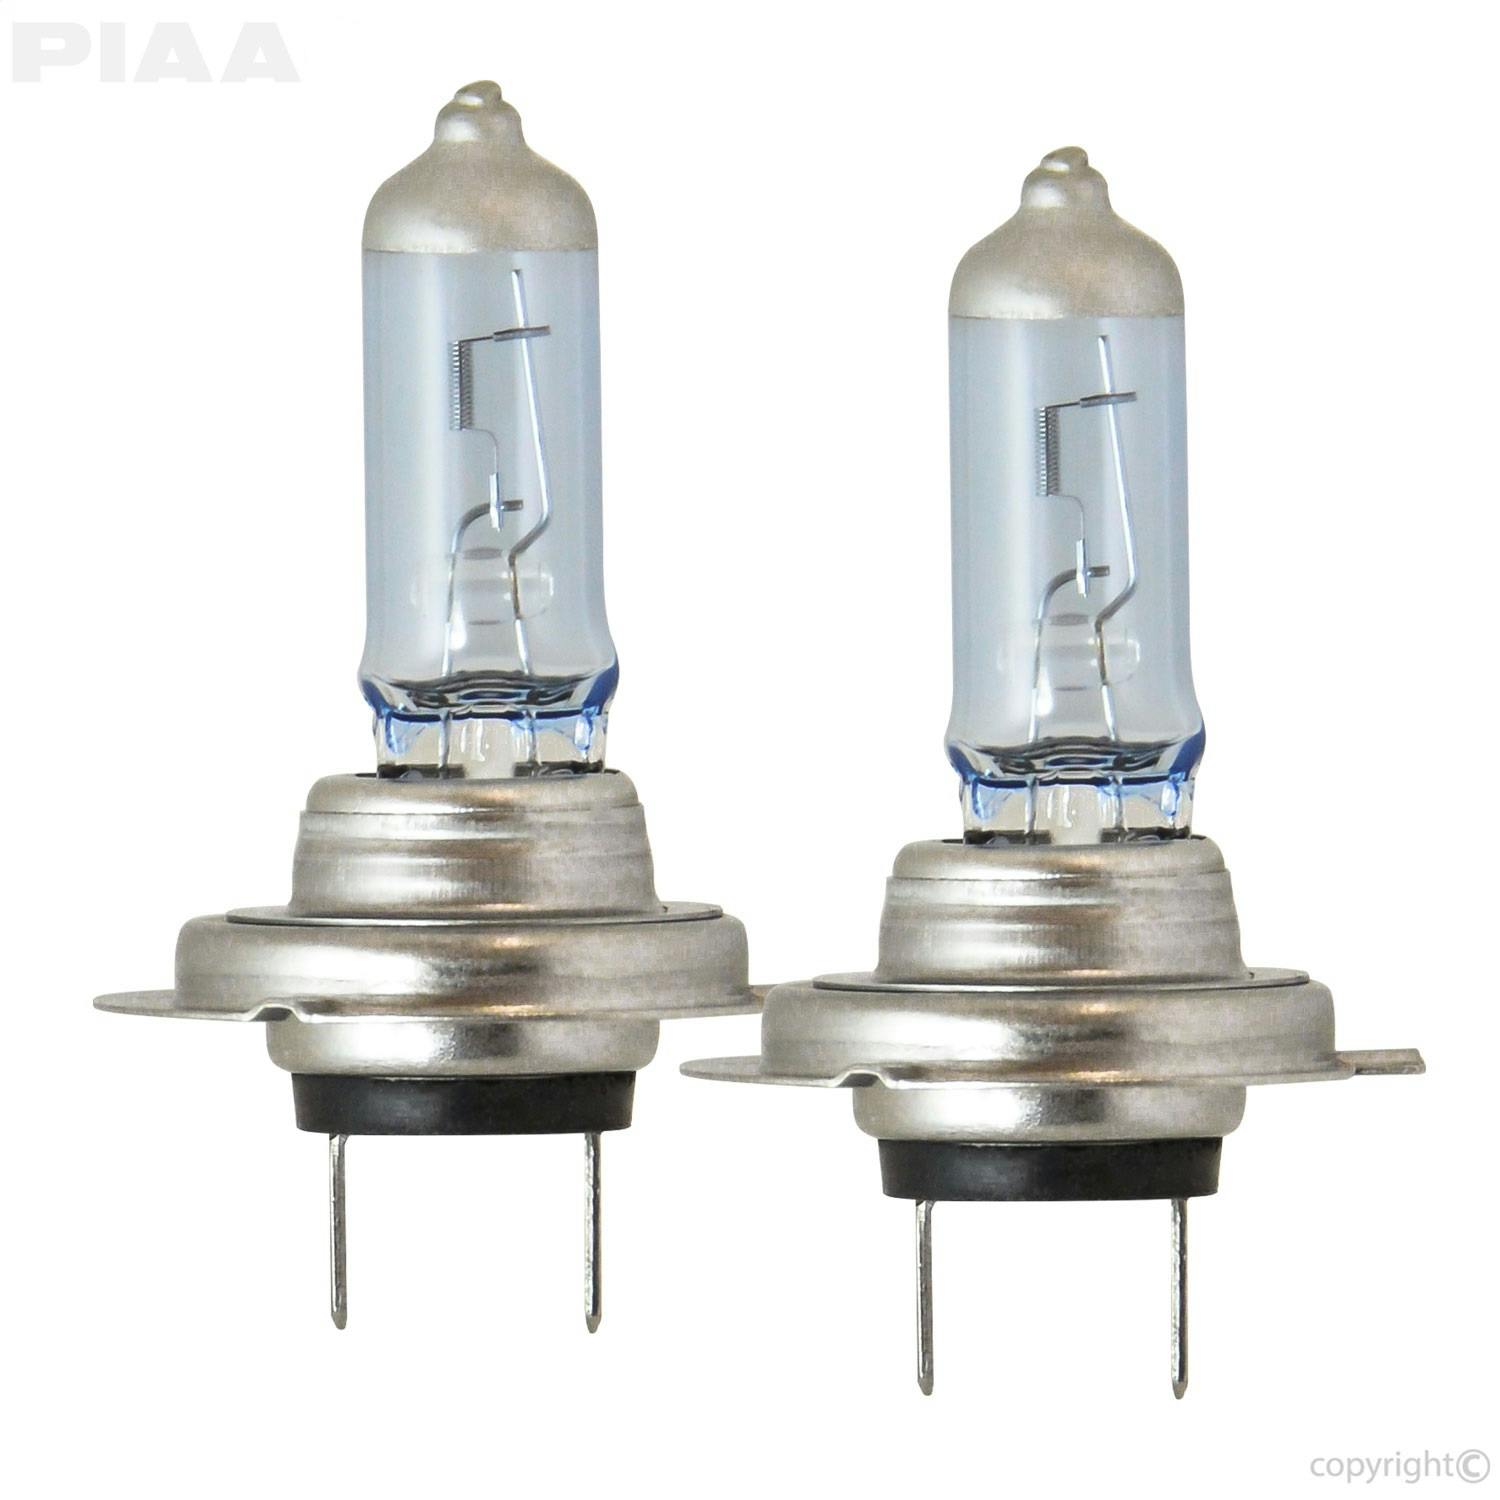 25W-2 Yr Warranty White 6000K PIAA 26-17392 9012 Platinum LED Bulb Kit-4000Lm